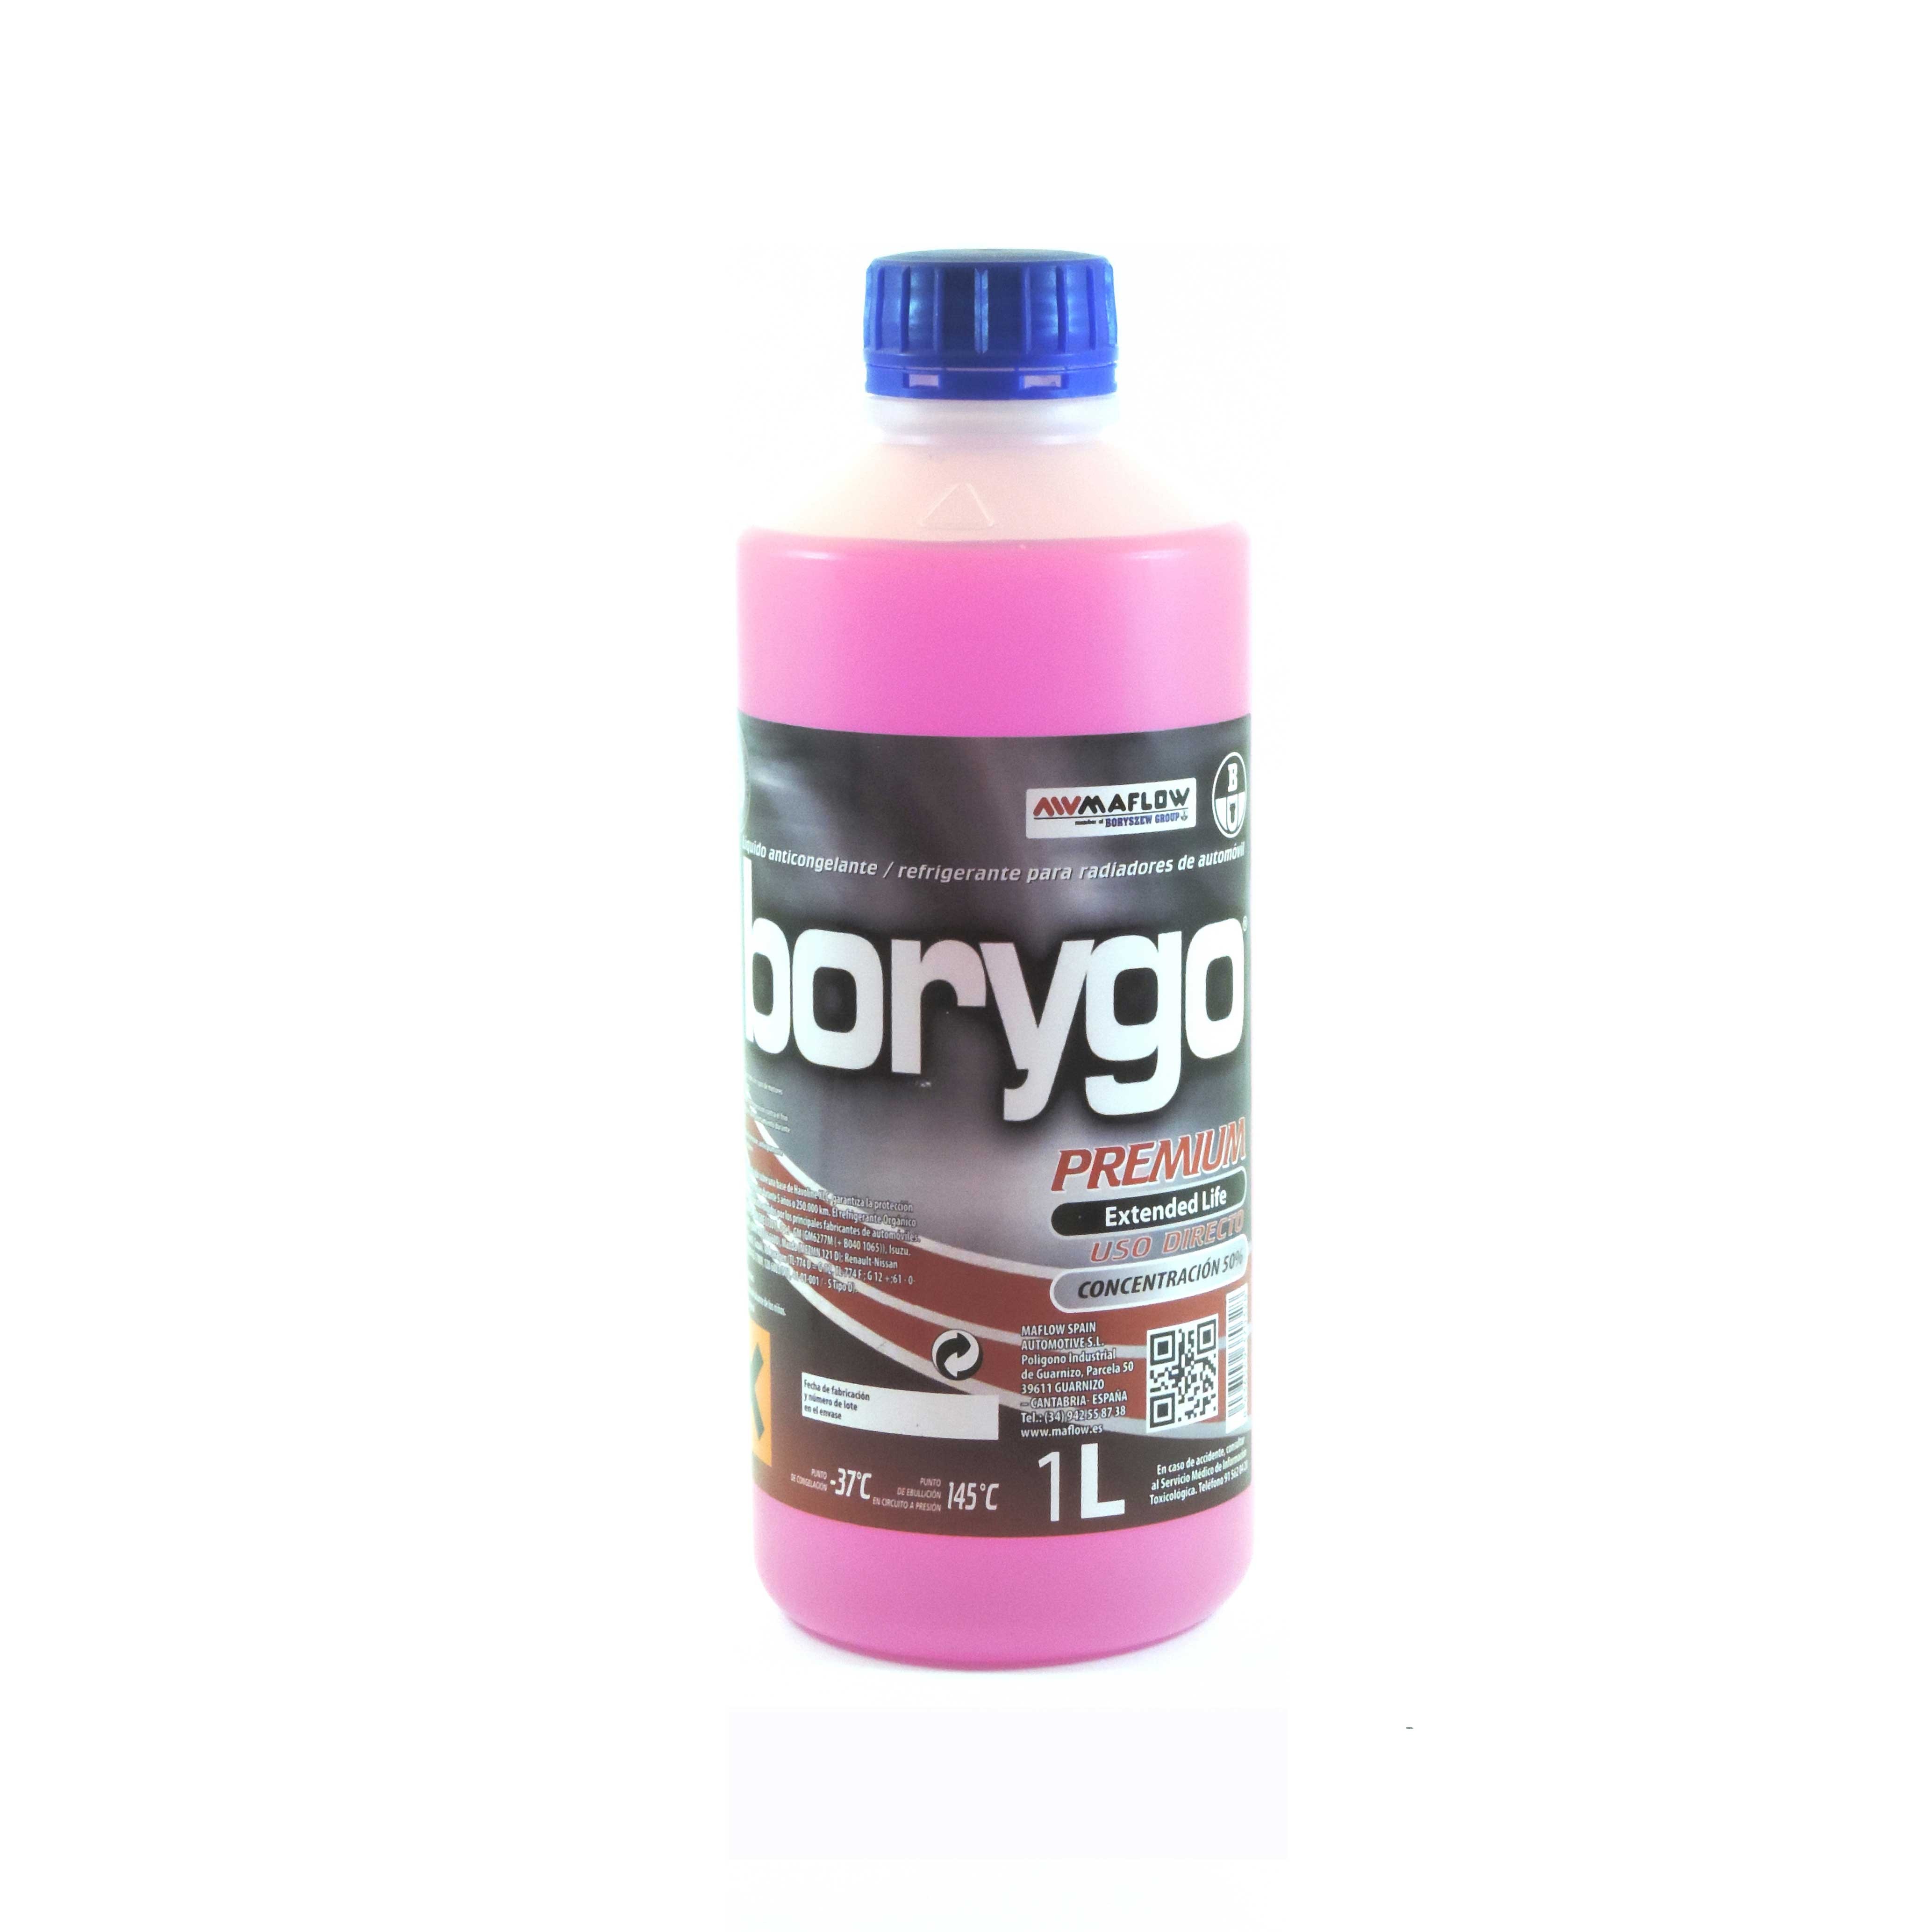 Anticongelante refrigerante Syncrogel 50% G12 5 Litros rosa — Totcar